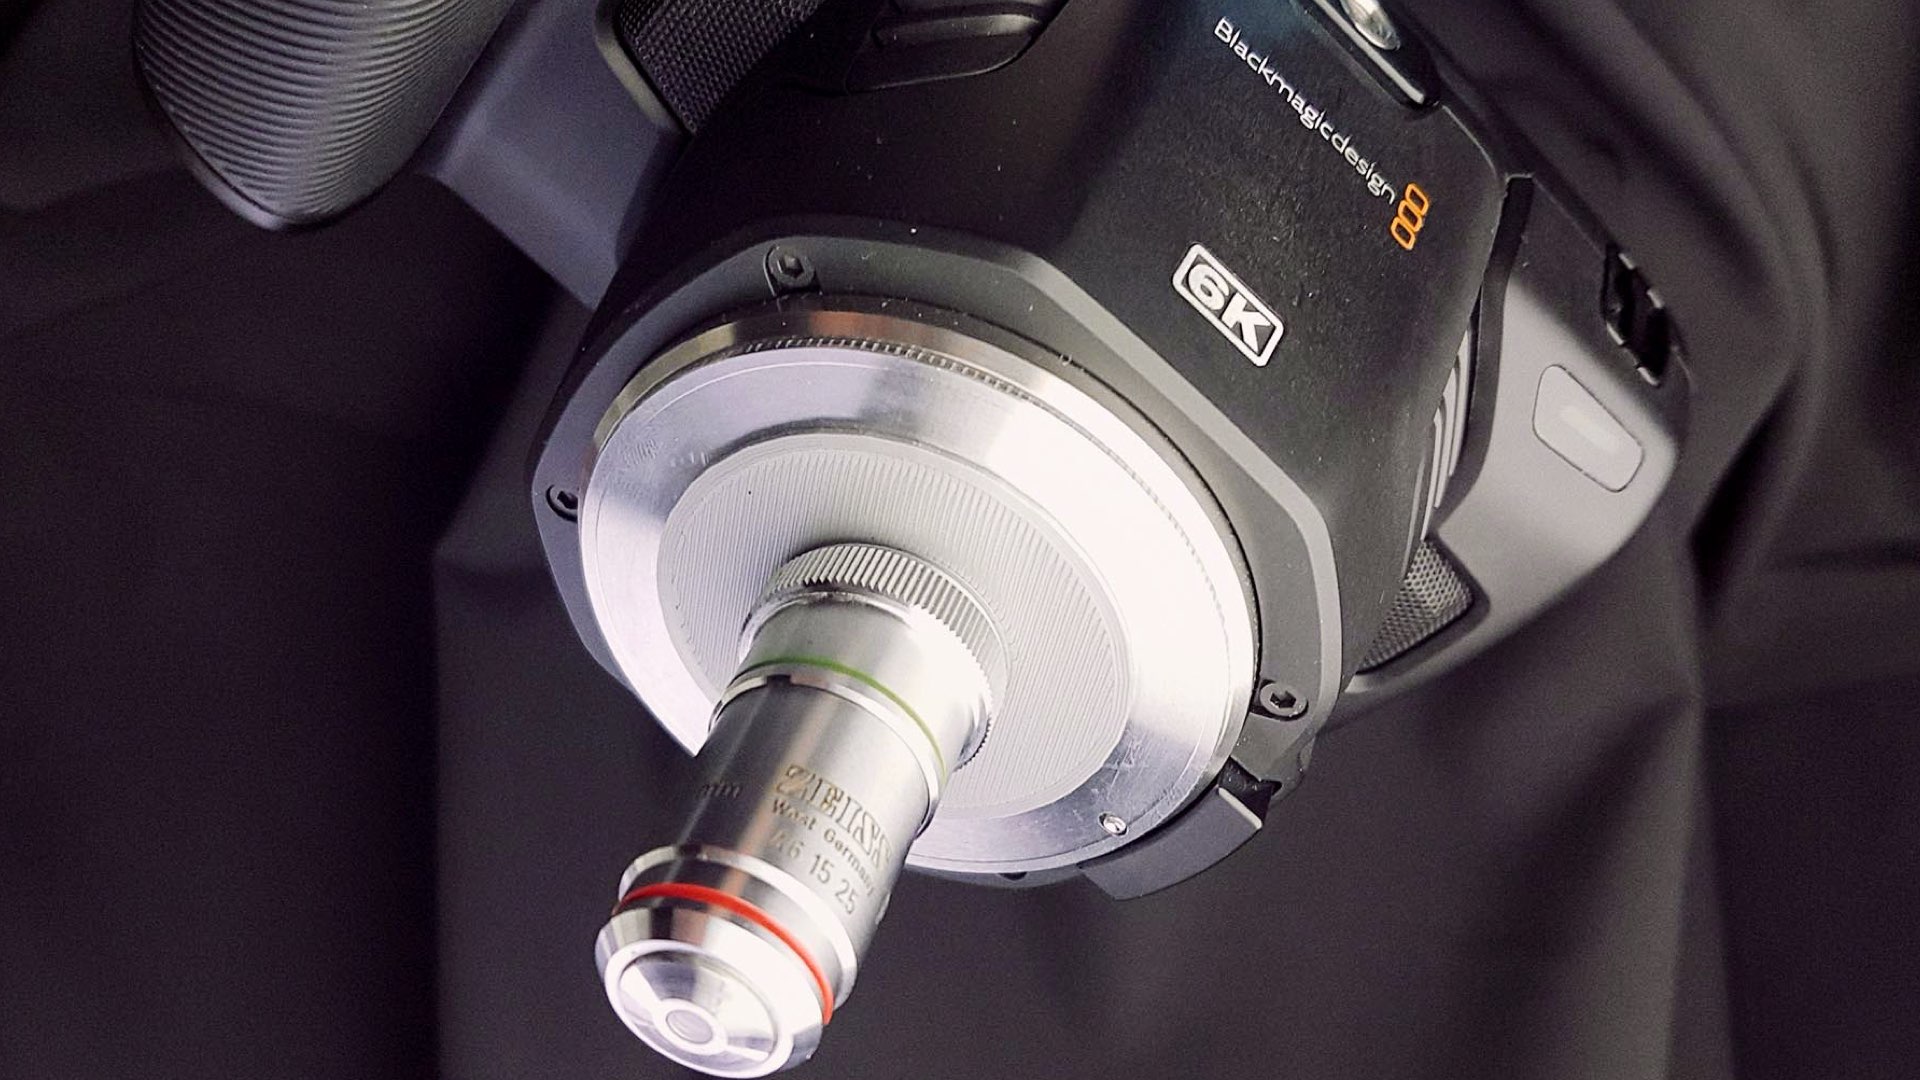 Blackmagic Pocket 6k with Zeiss 16x microscope lens. Image: Daniel Schweinert